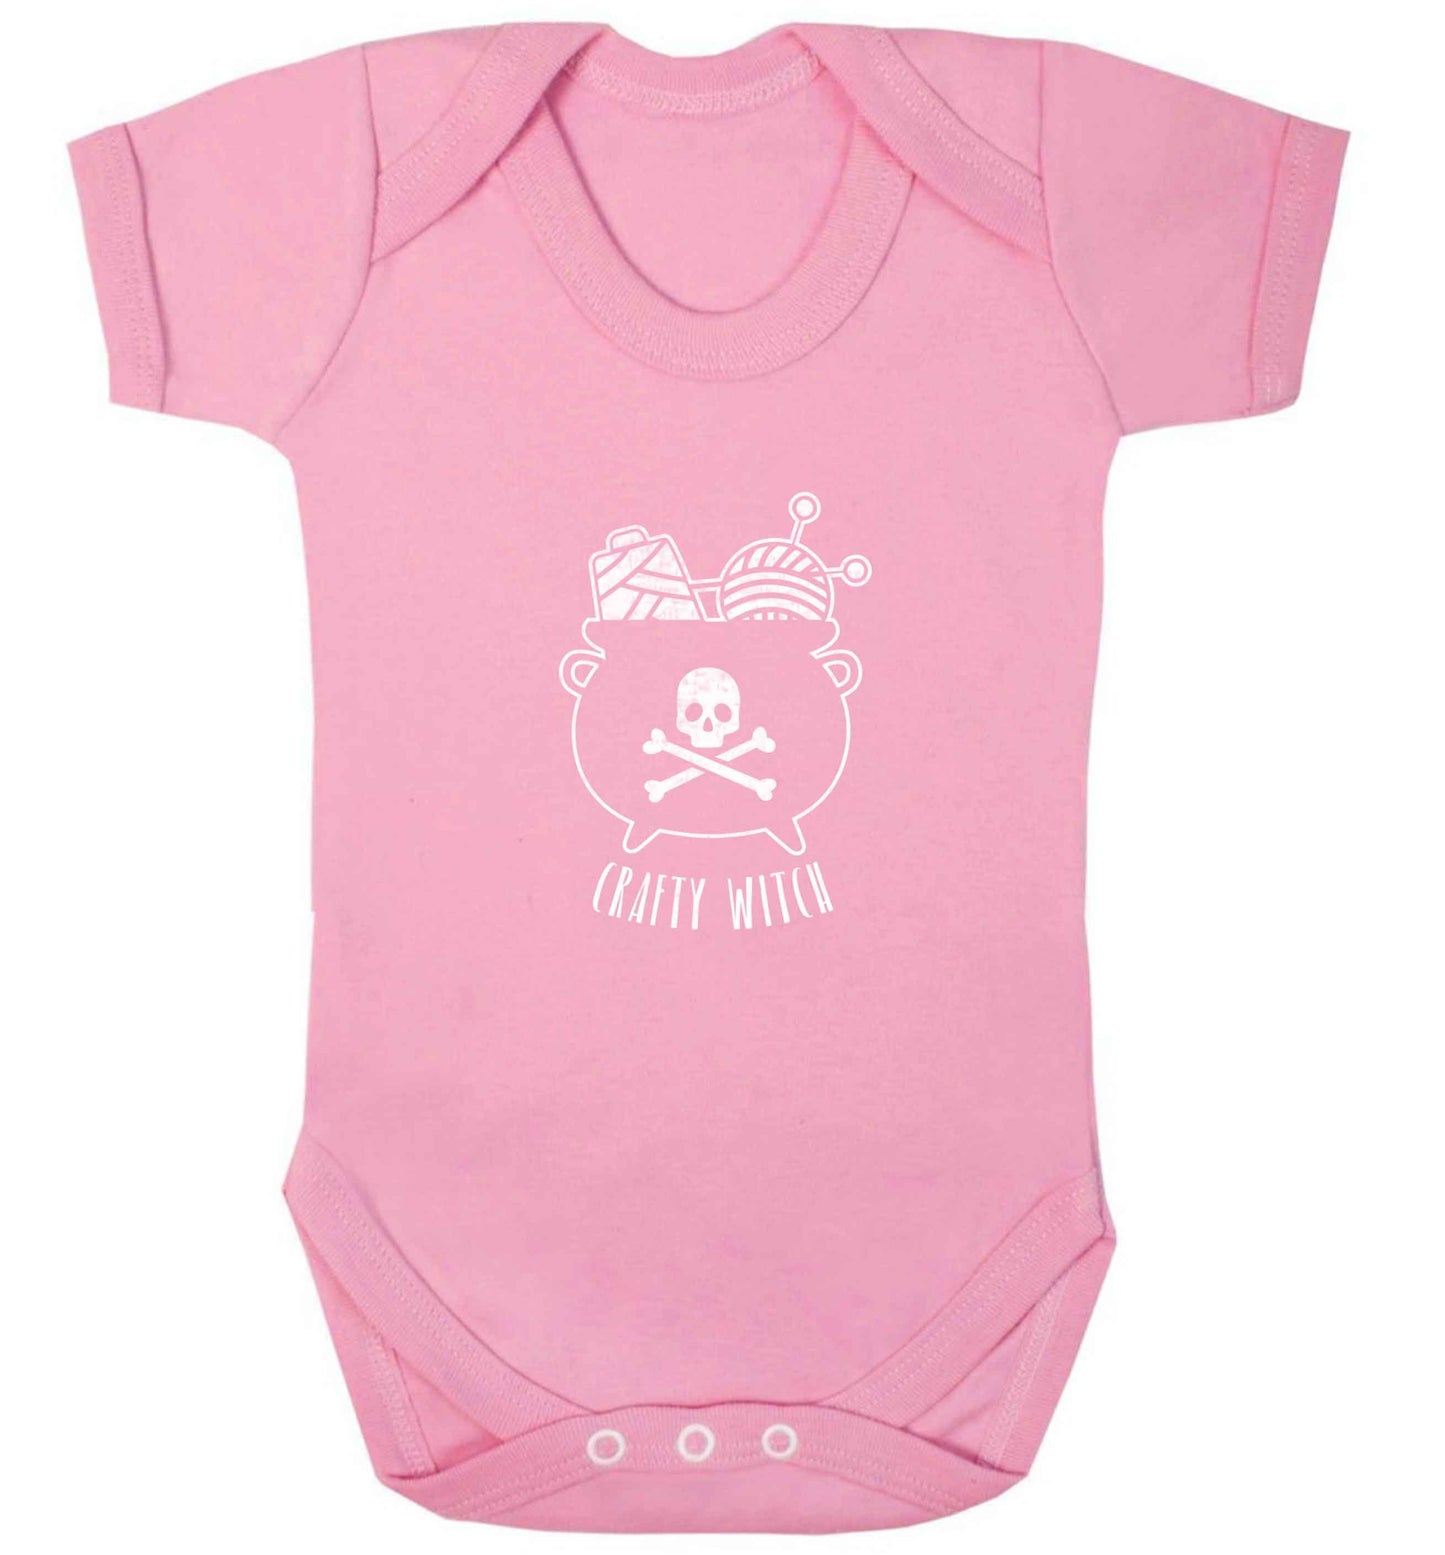 Crafty witch baby vest pale pink 18-24 months